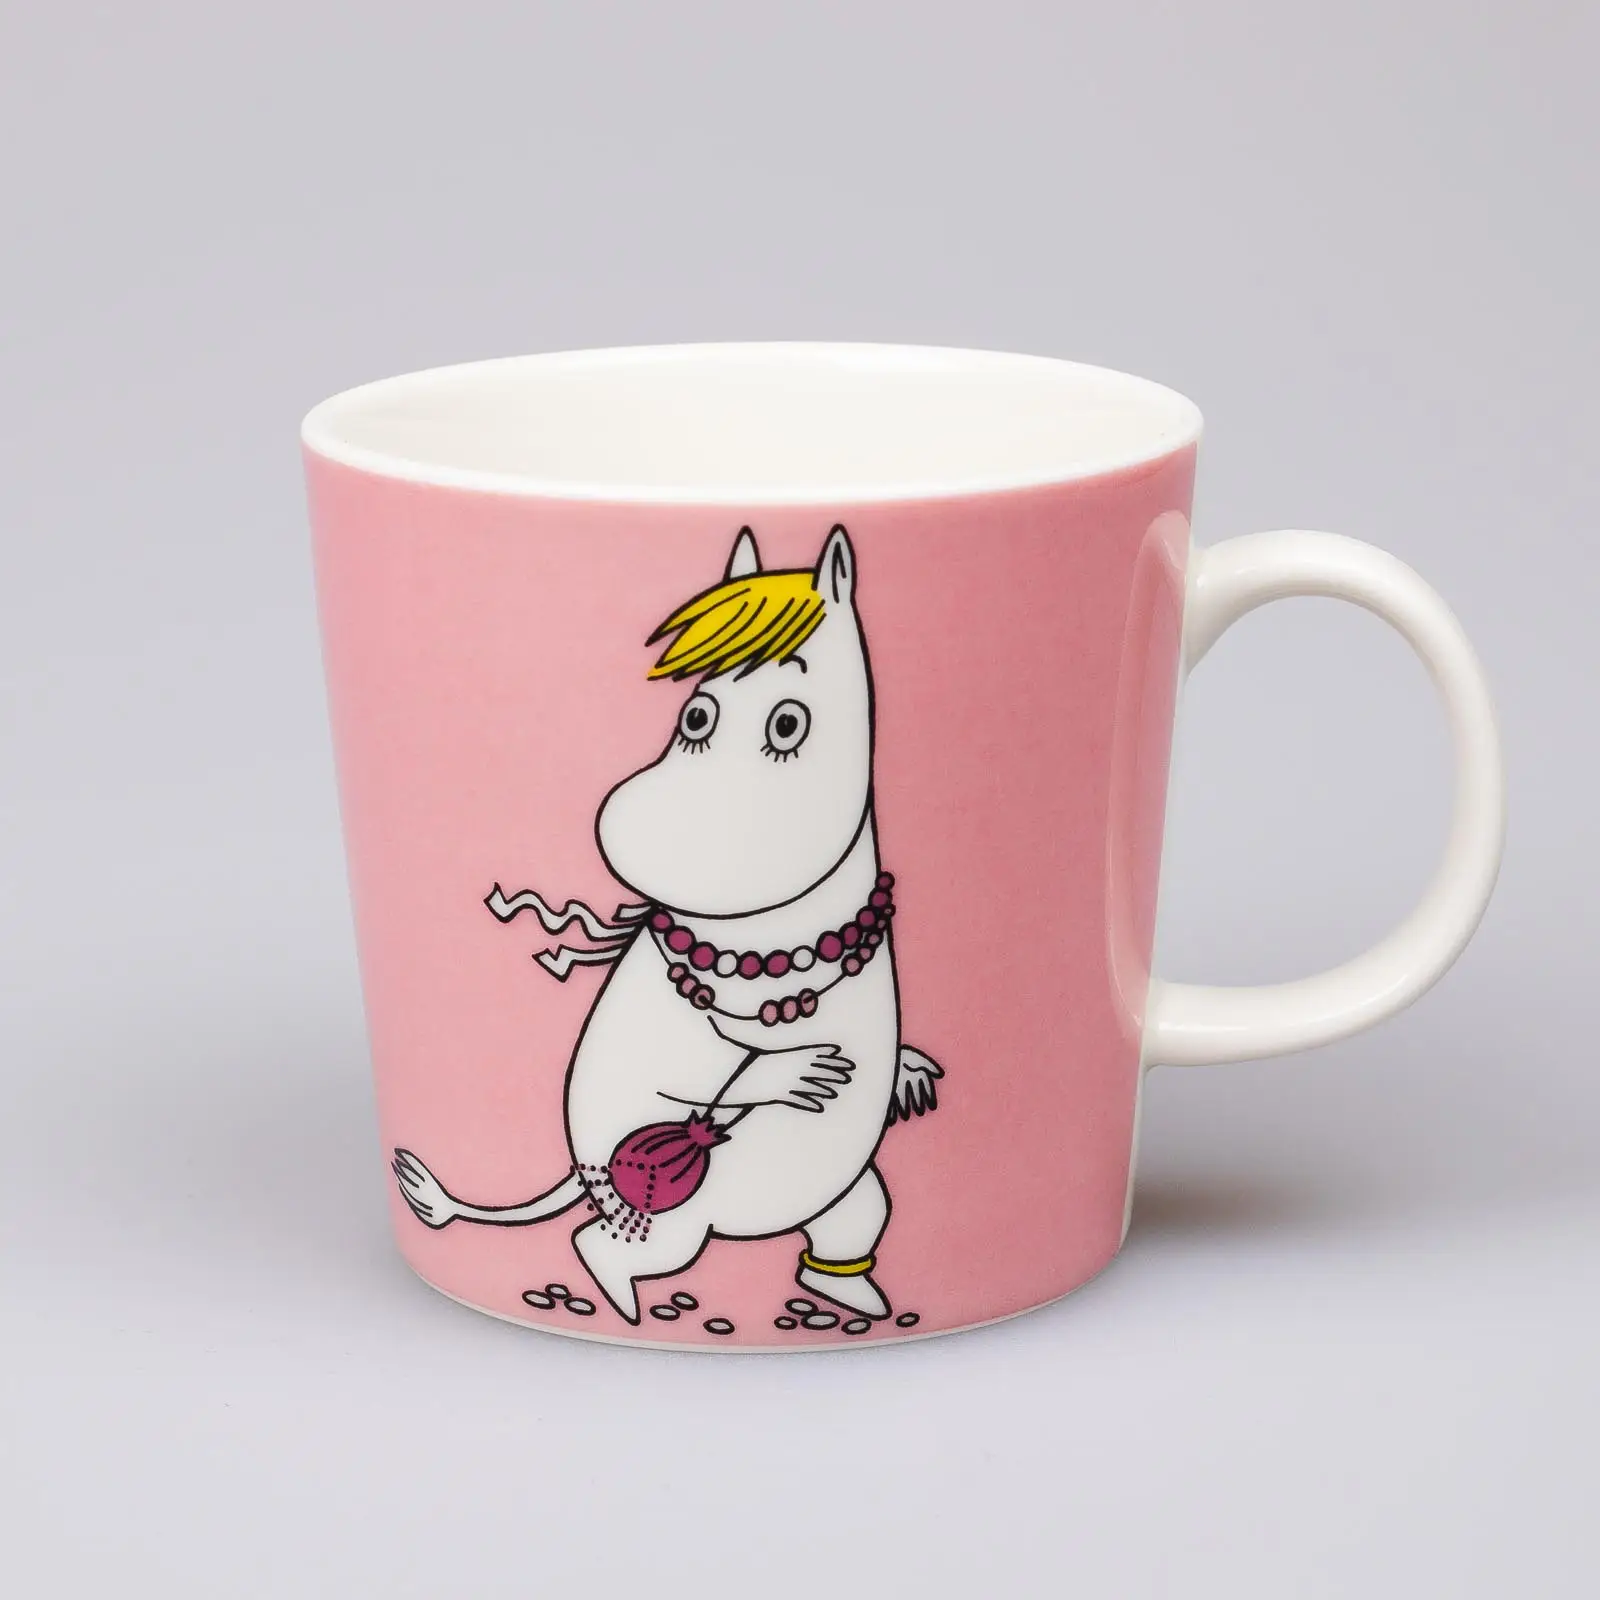 Moomin mug – Snorkmaiden – (2013 – 2019)